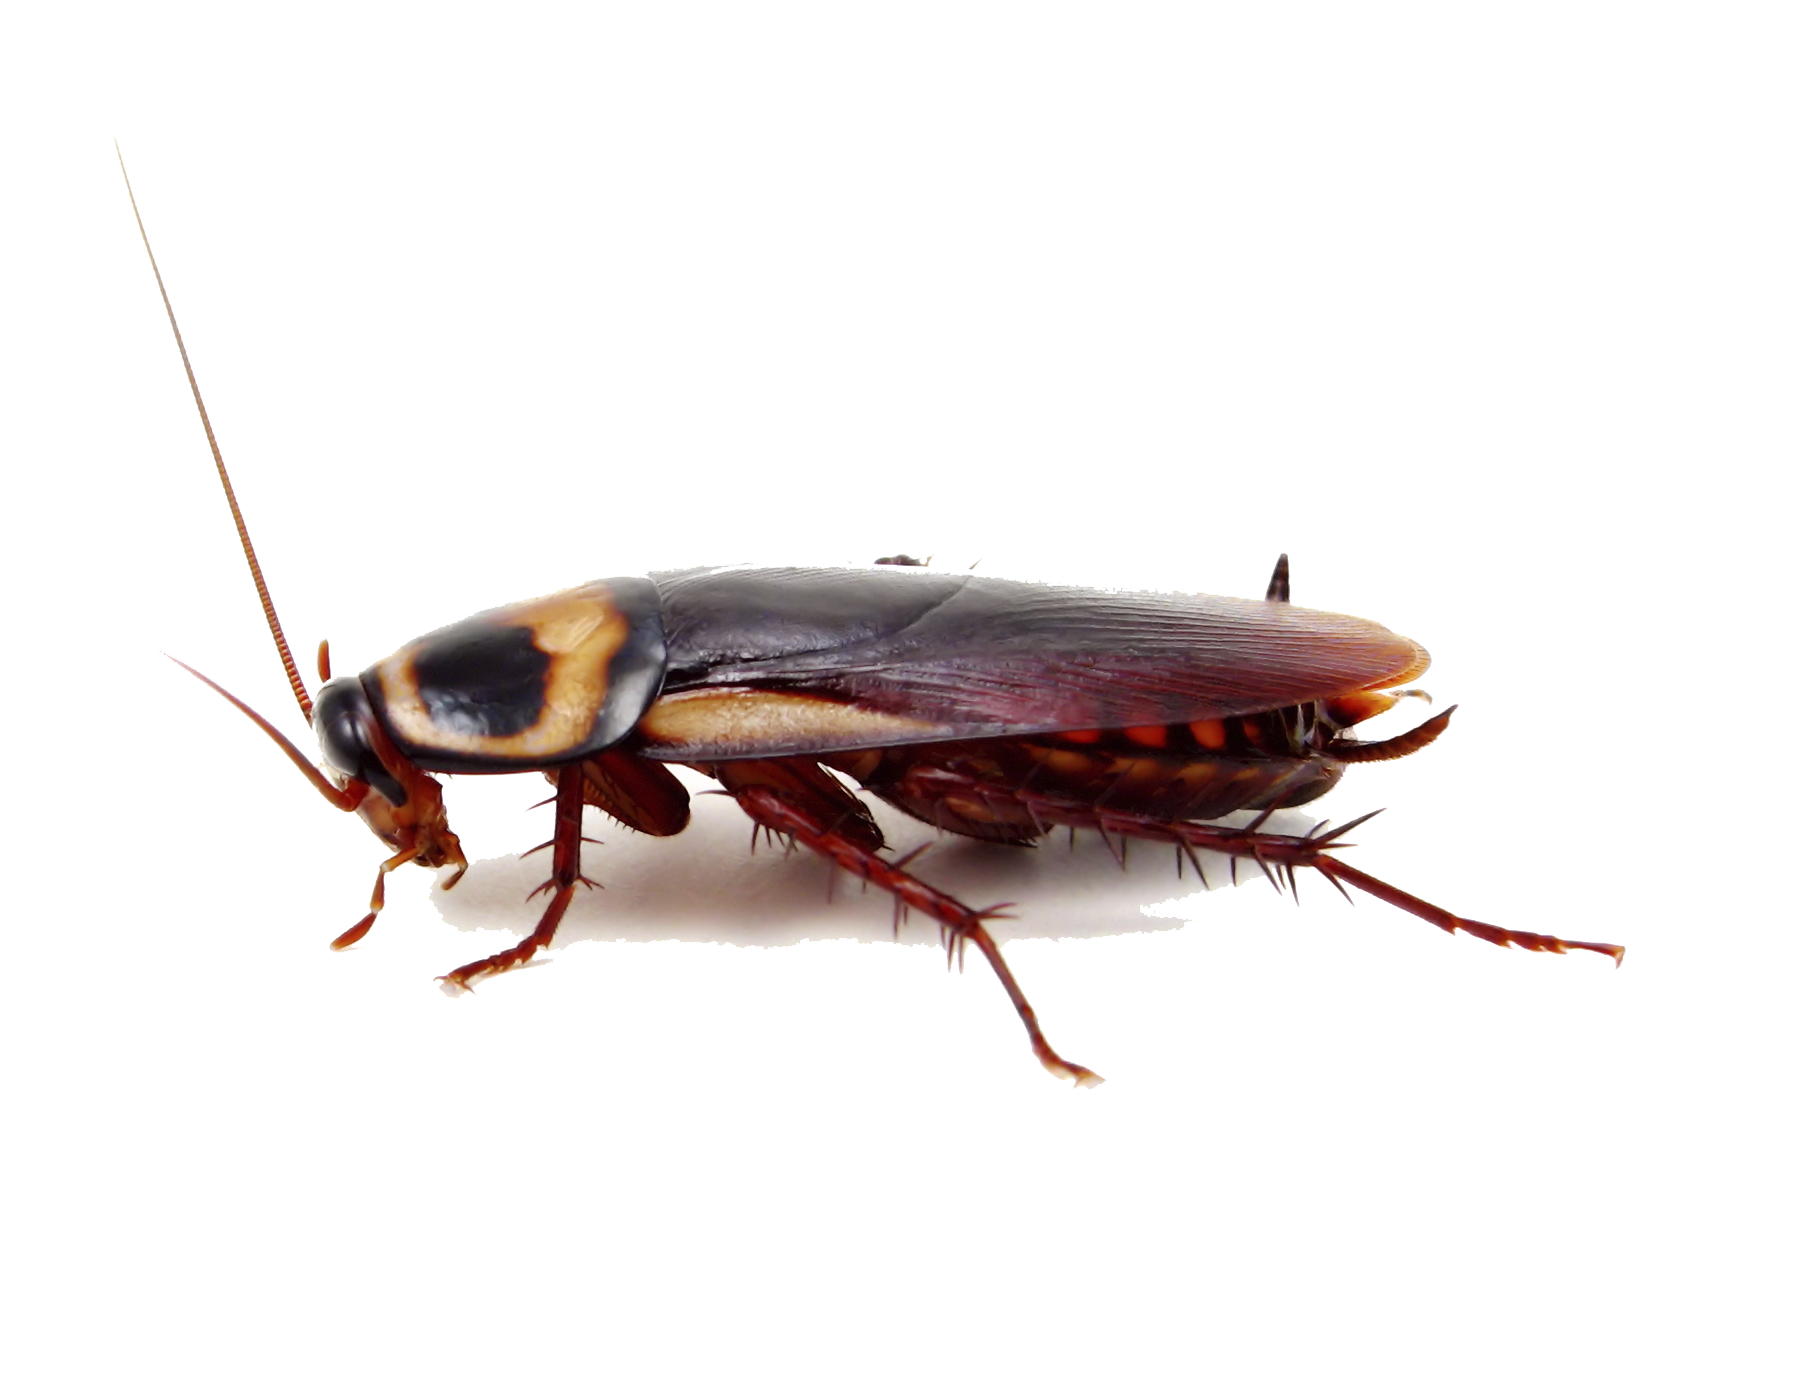 Cockroach PNG-PlusPNG.com-170